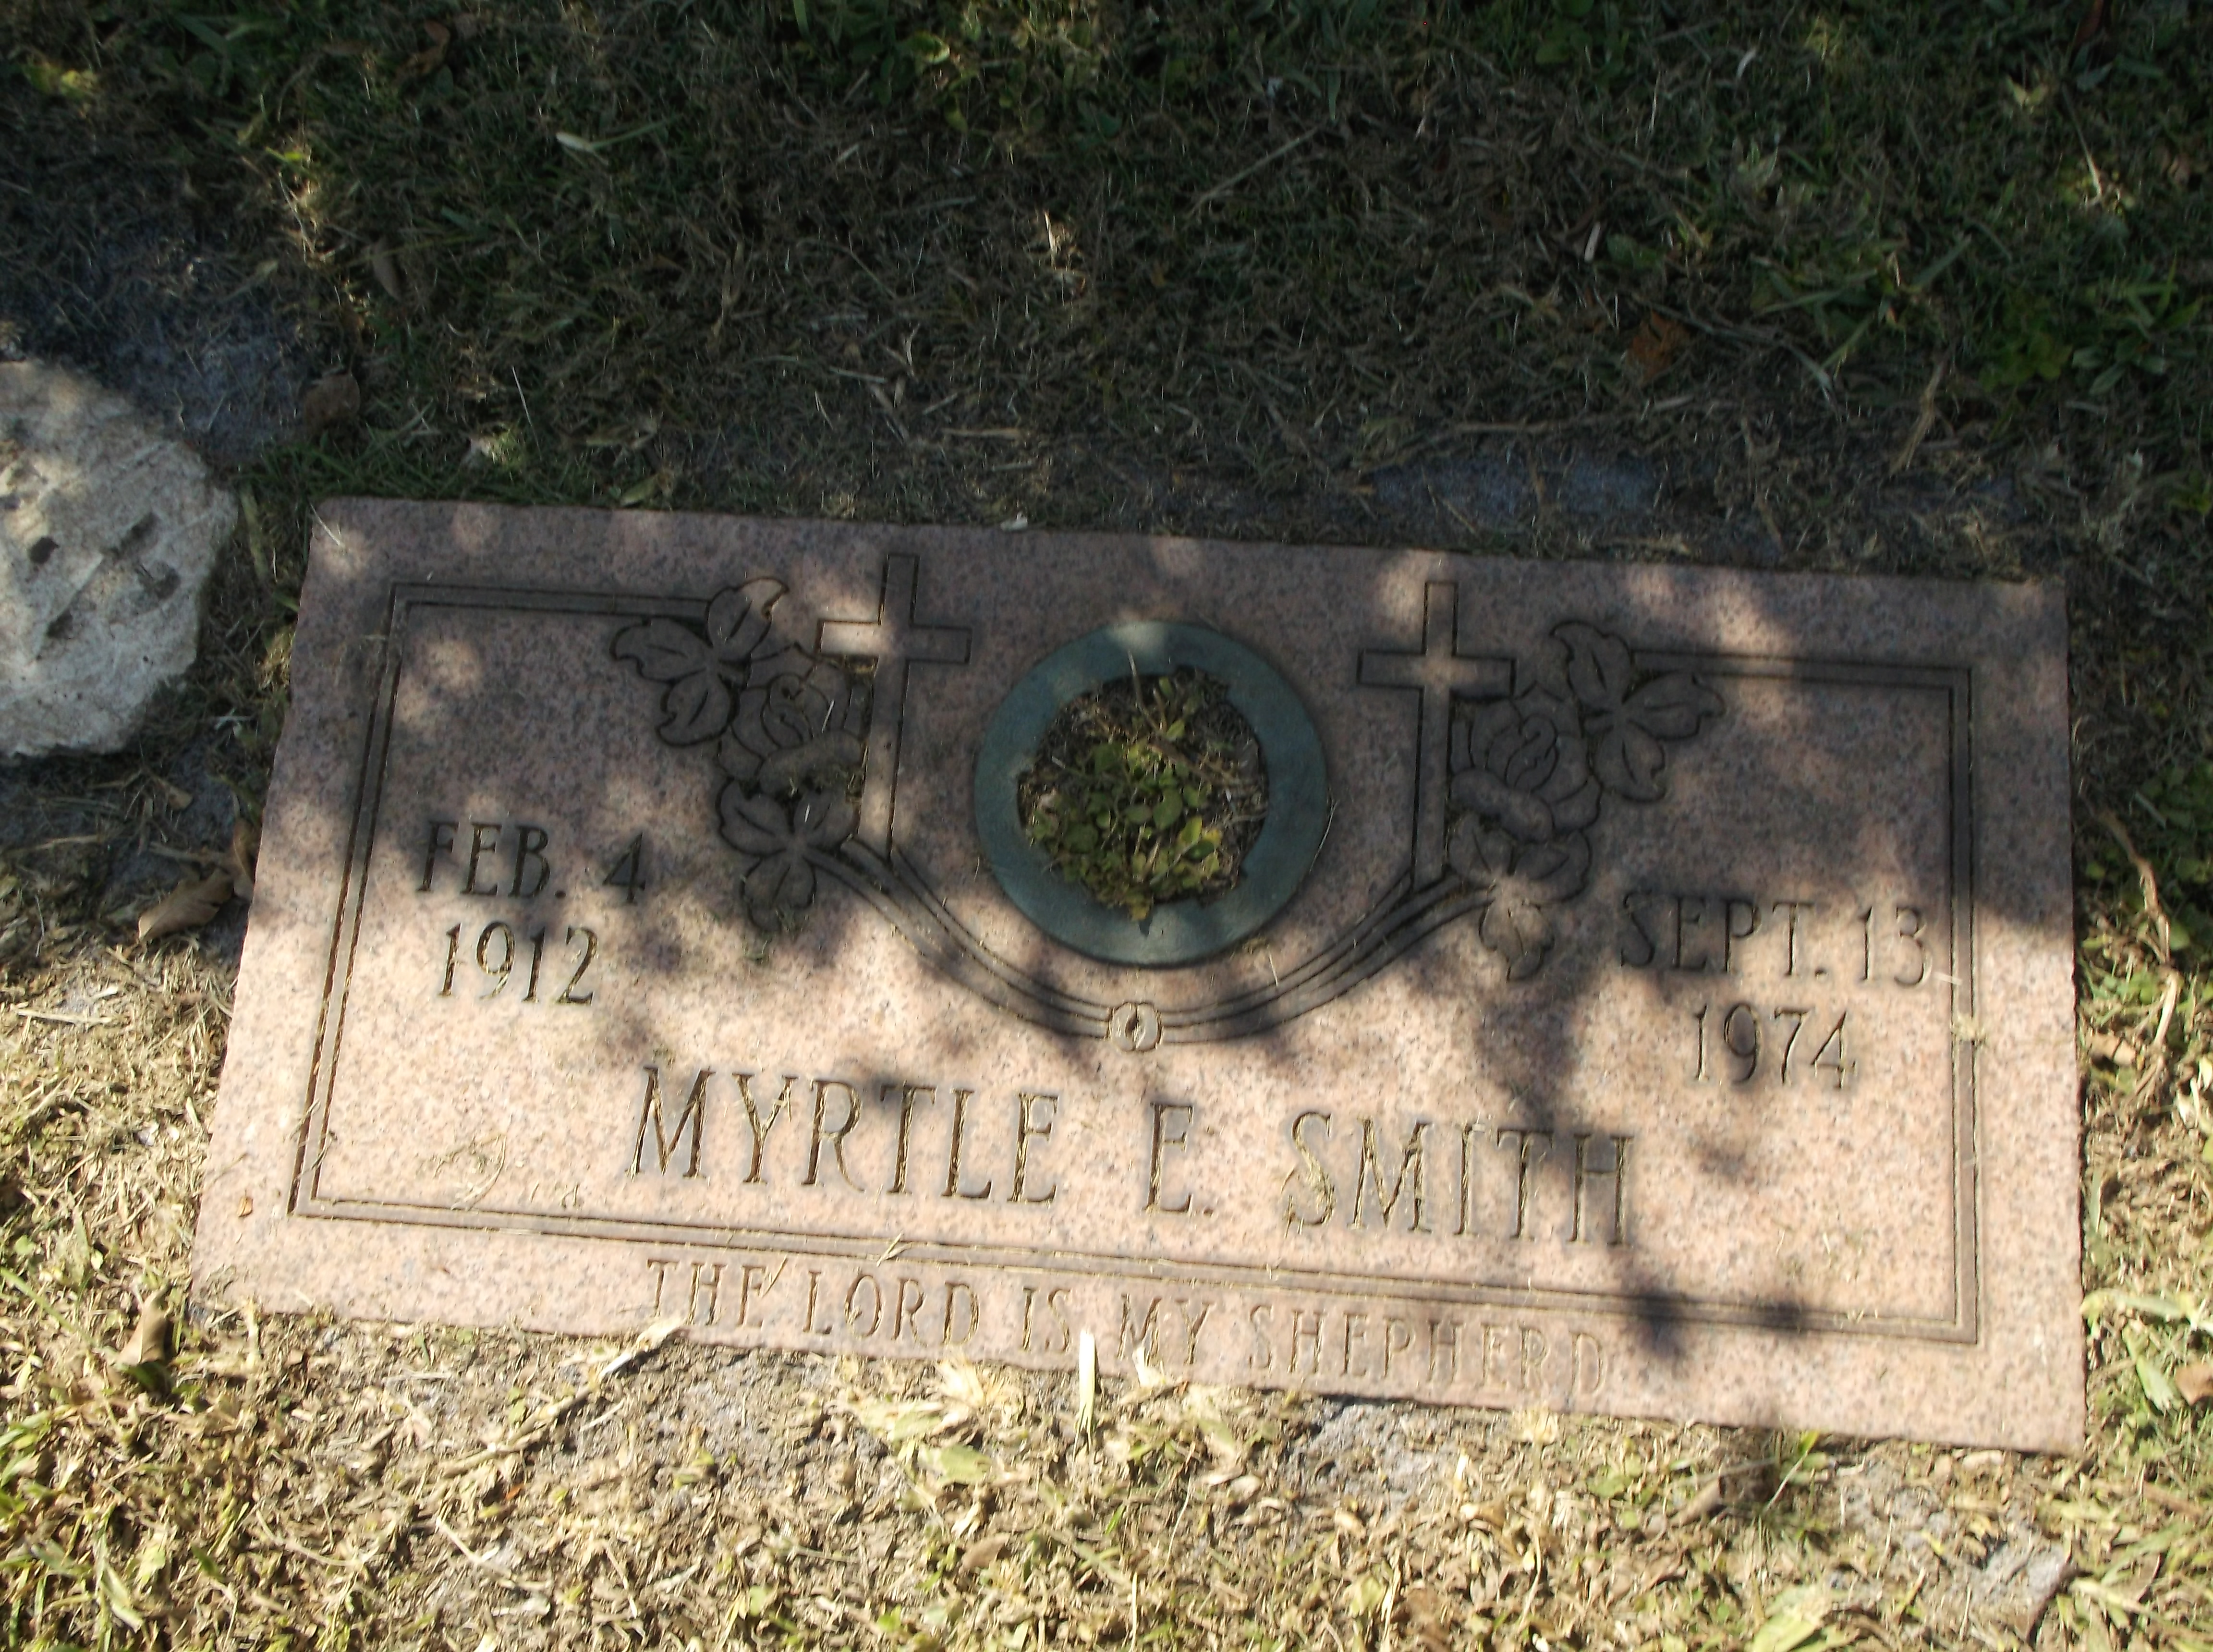 Myrtle E Smith